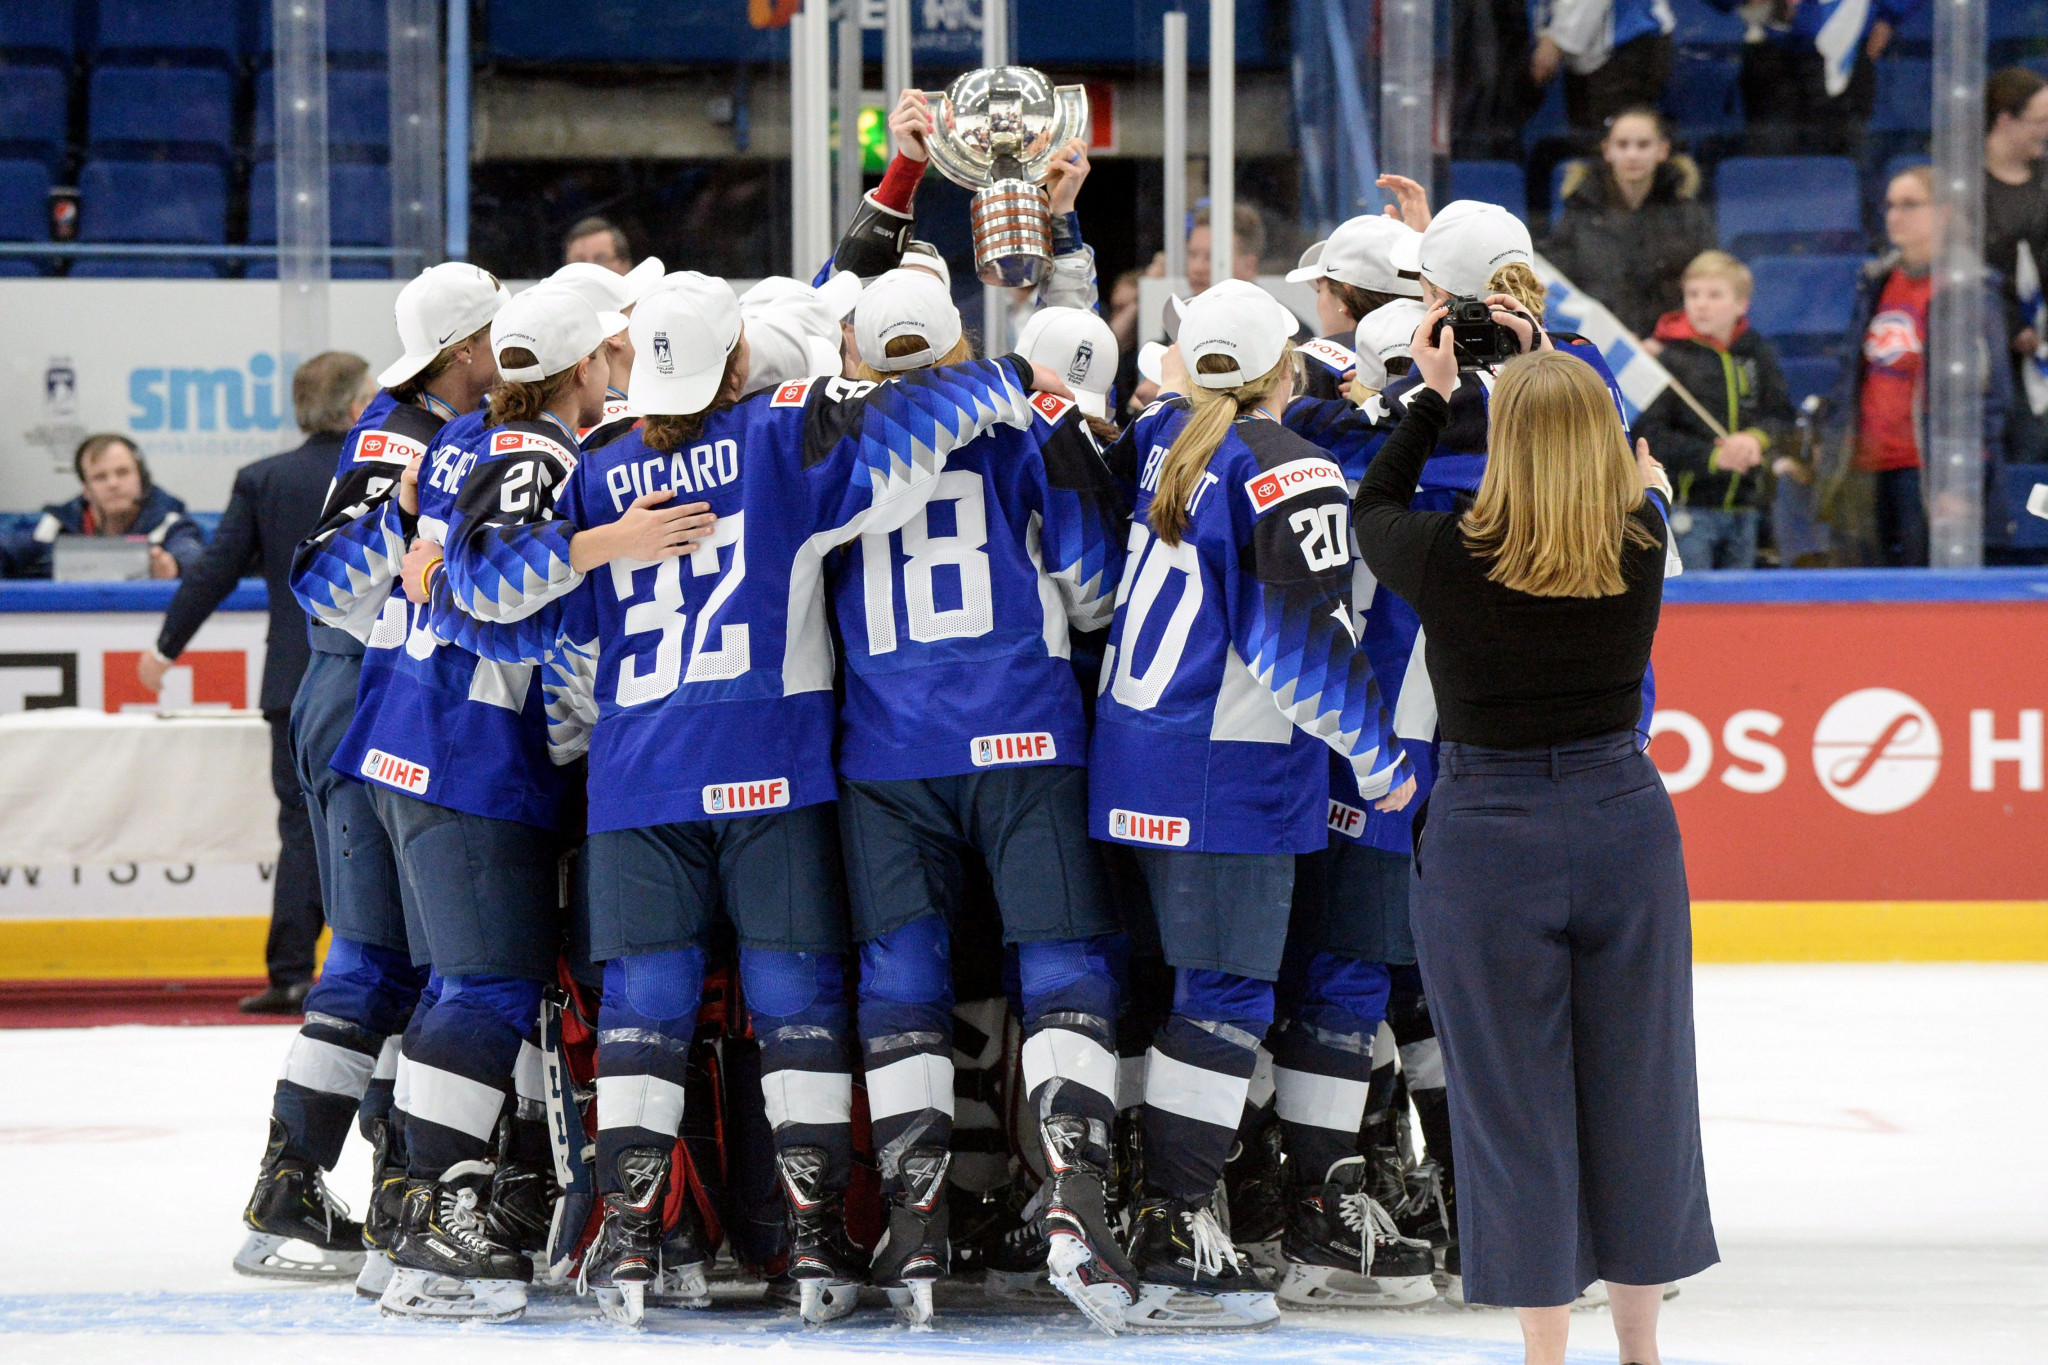 Schedule released for IIHF Women's World Ice Hockey Championship